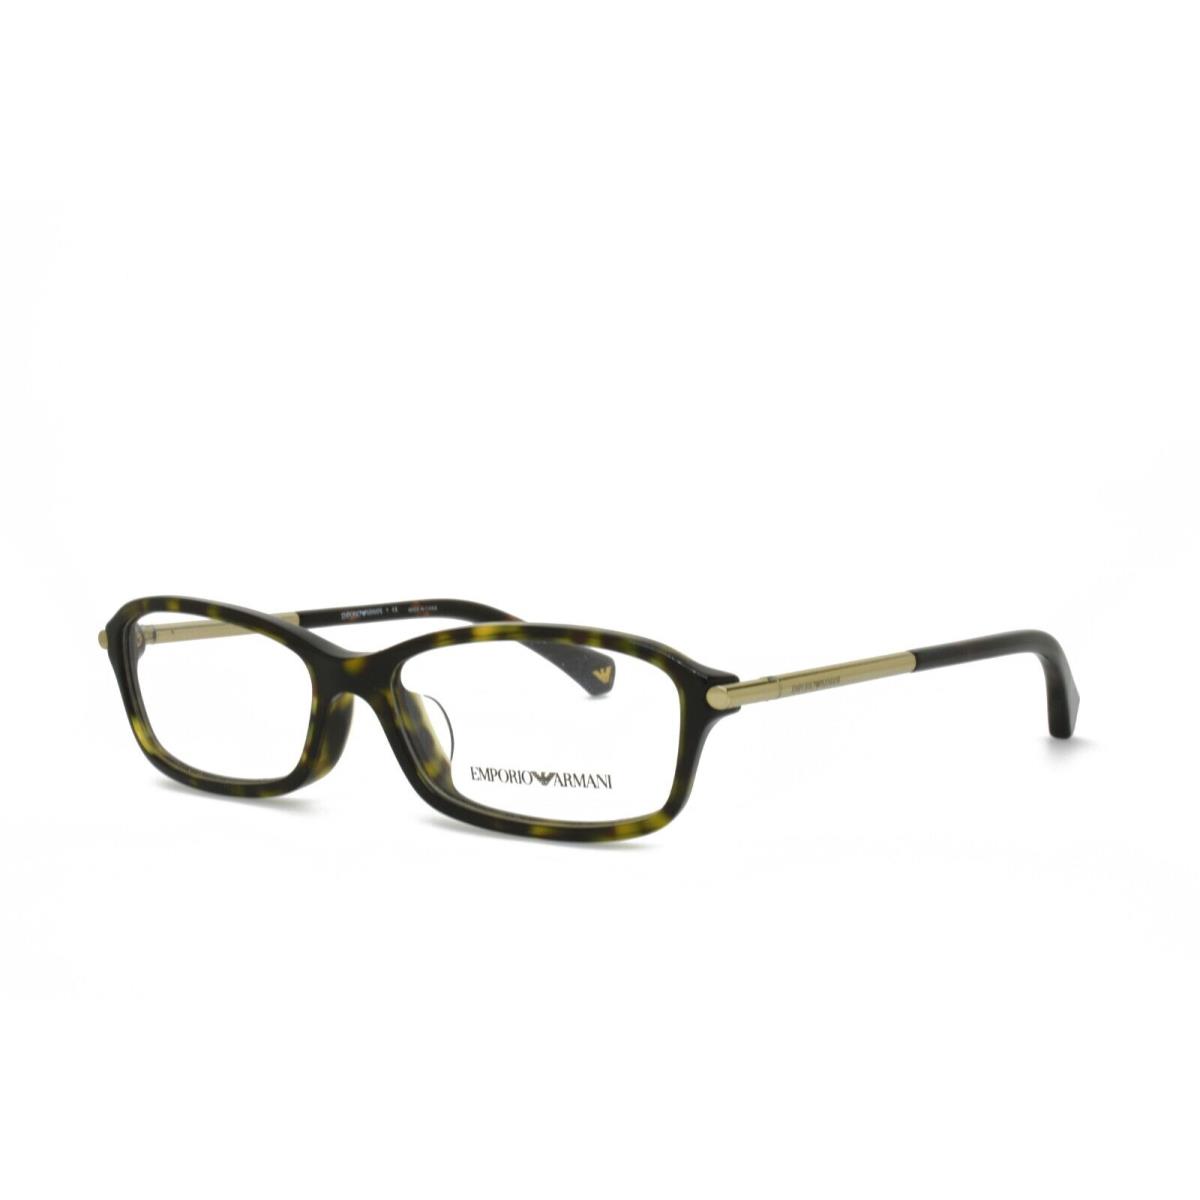 Emporio Armani 3006F 5026 53-15-135 Tortoise Eyeglasses Frames